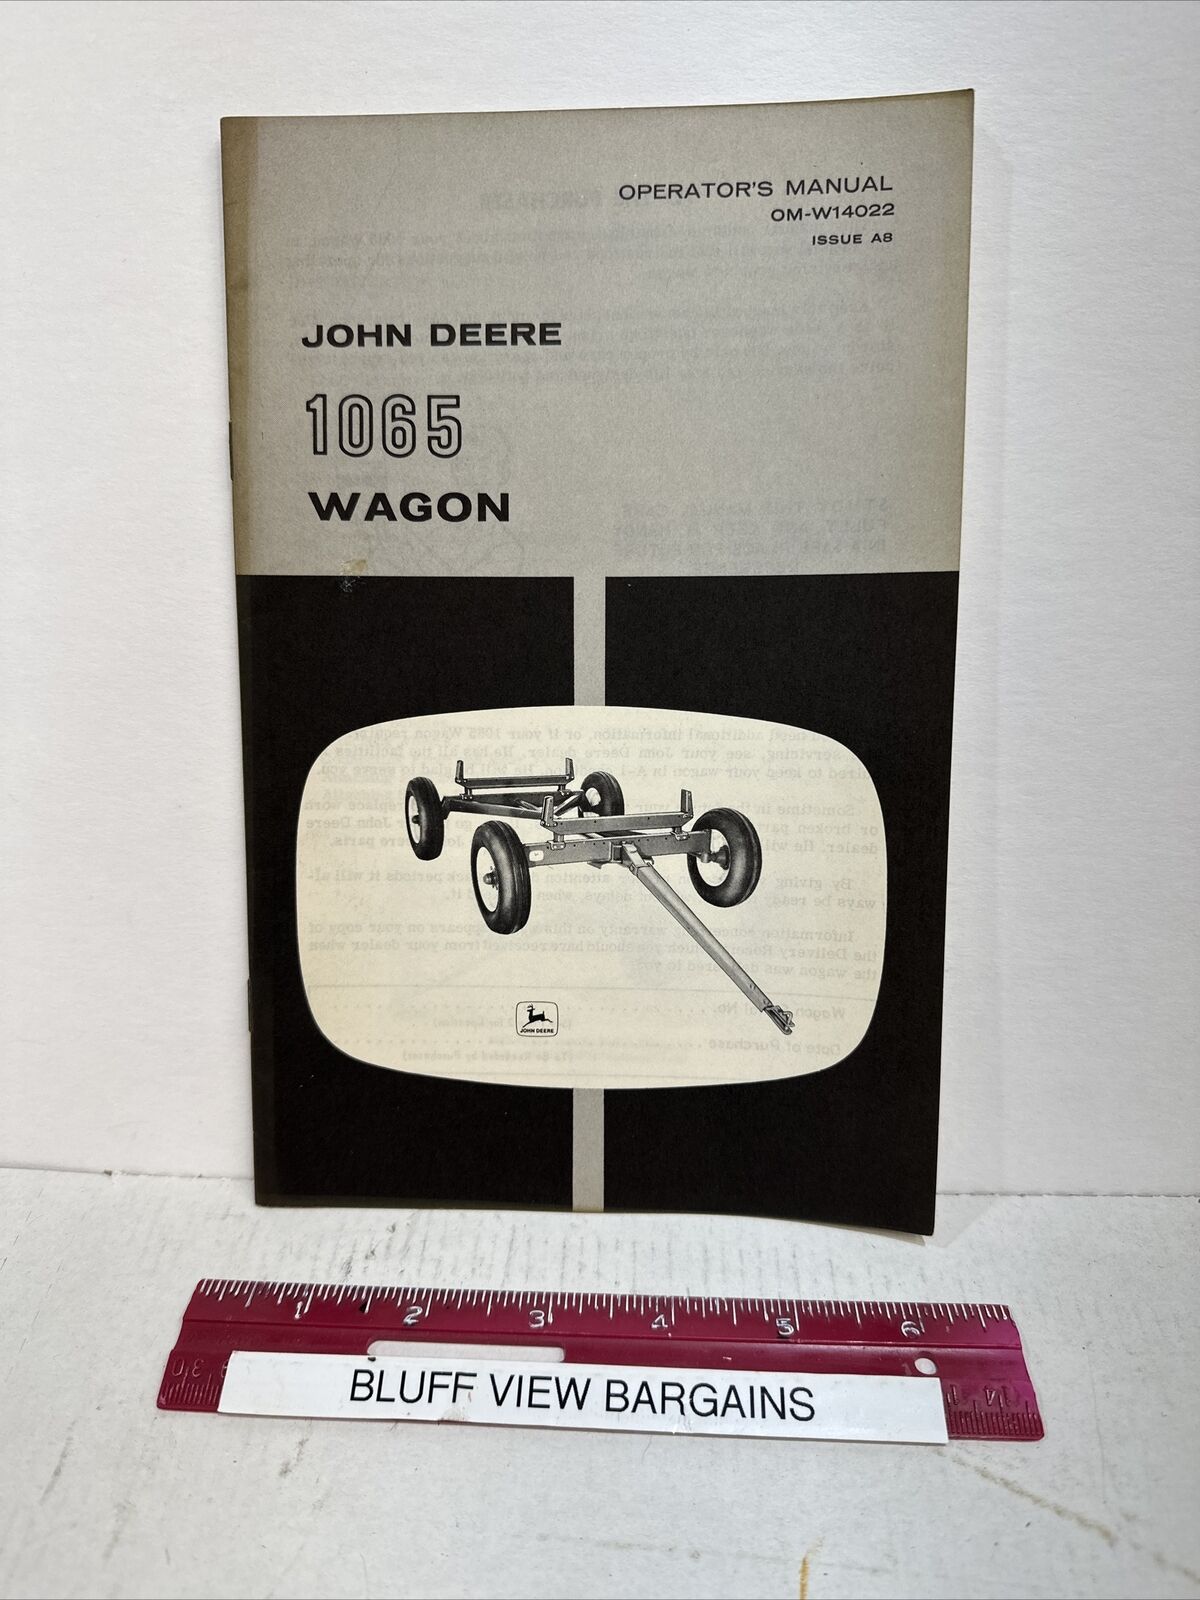 1950\'s John Deere Operator\'s Manual OM-W14022 Issue A8 Wagon 1065